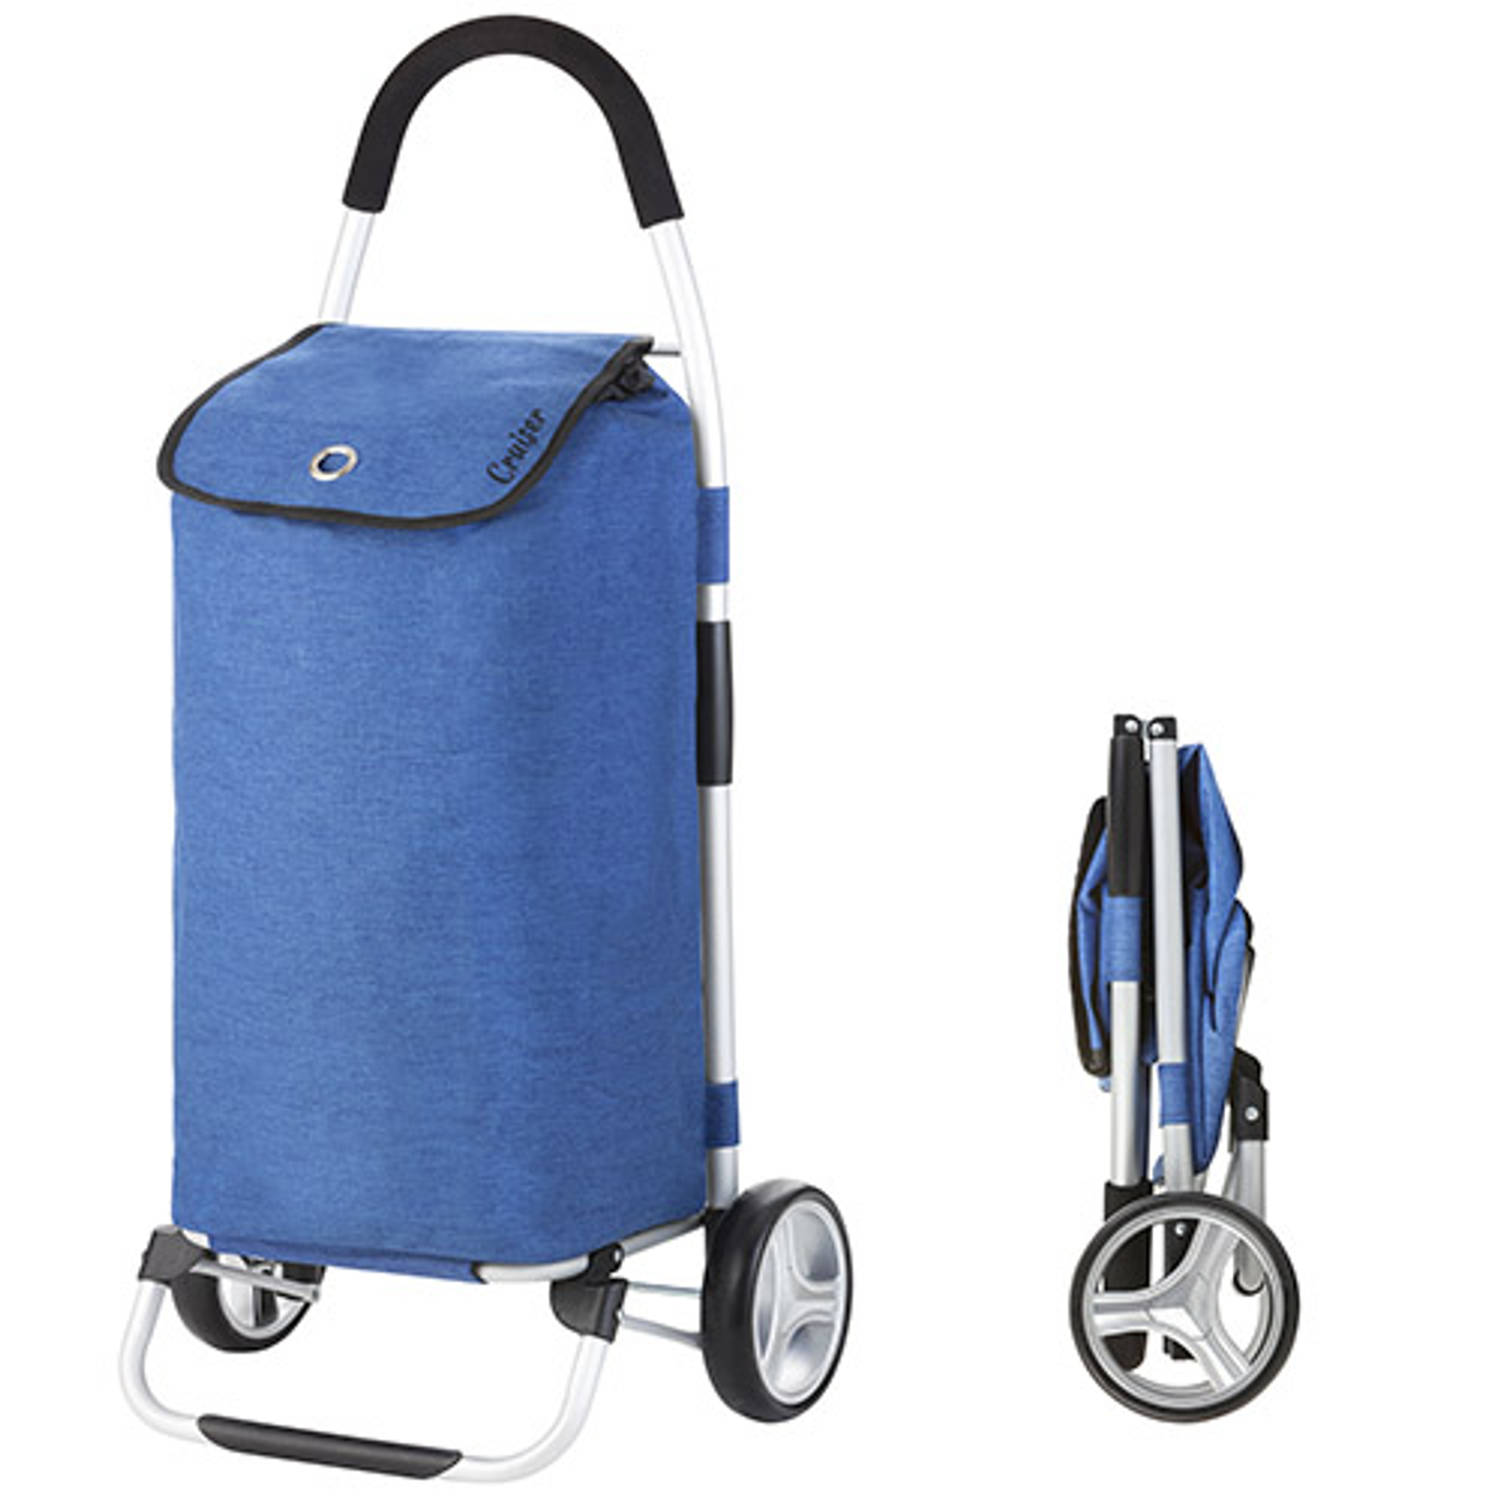 Vaag Vergelijken Gelovige ShoppingCruiser Foldable Boodschappentrolley - Opvouwbare boodschappenwagen  45 liter - Blauw | Blokker